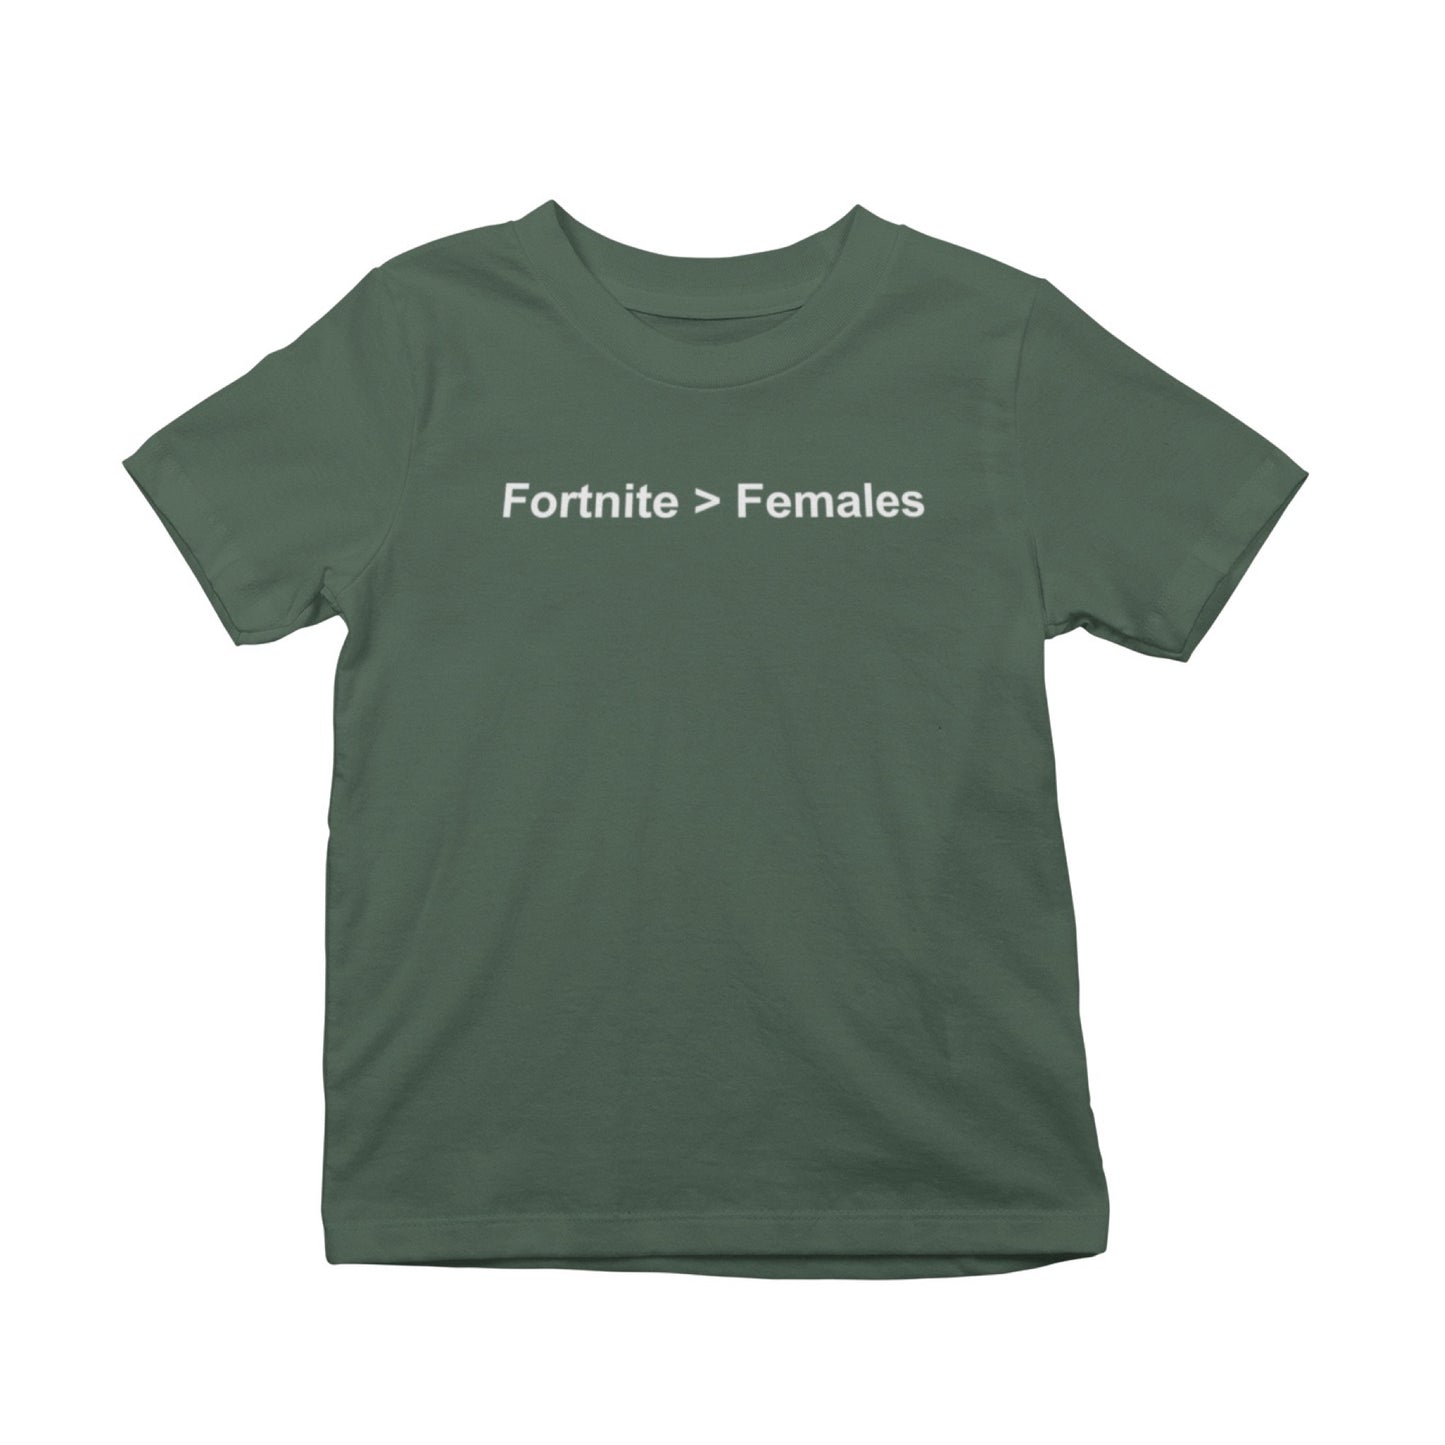 Fortnite > Females T-Shirt